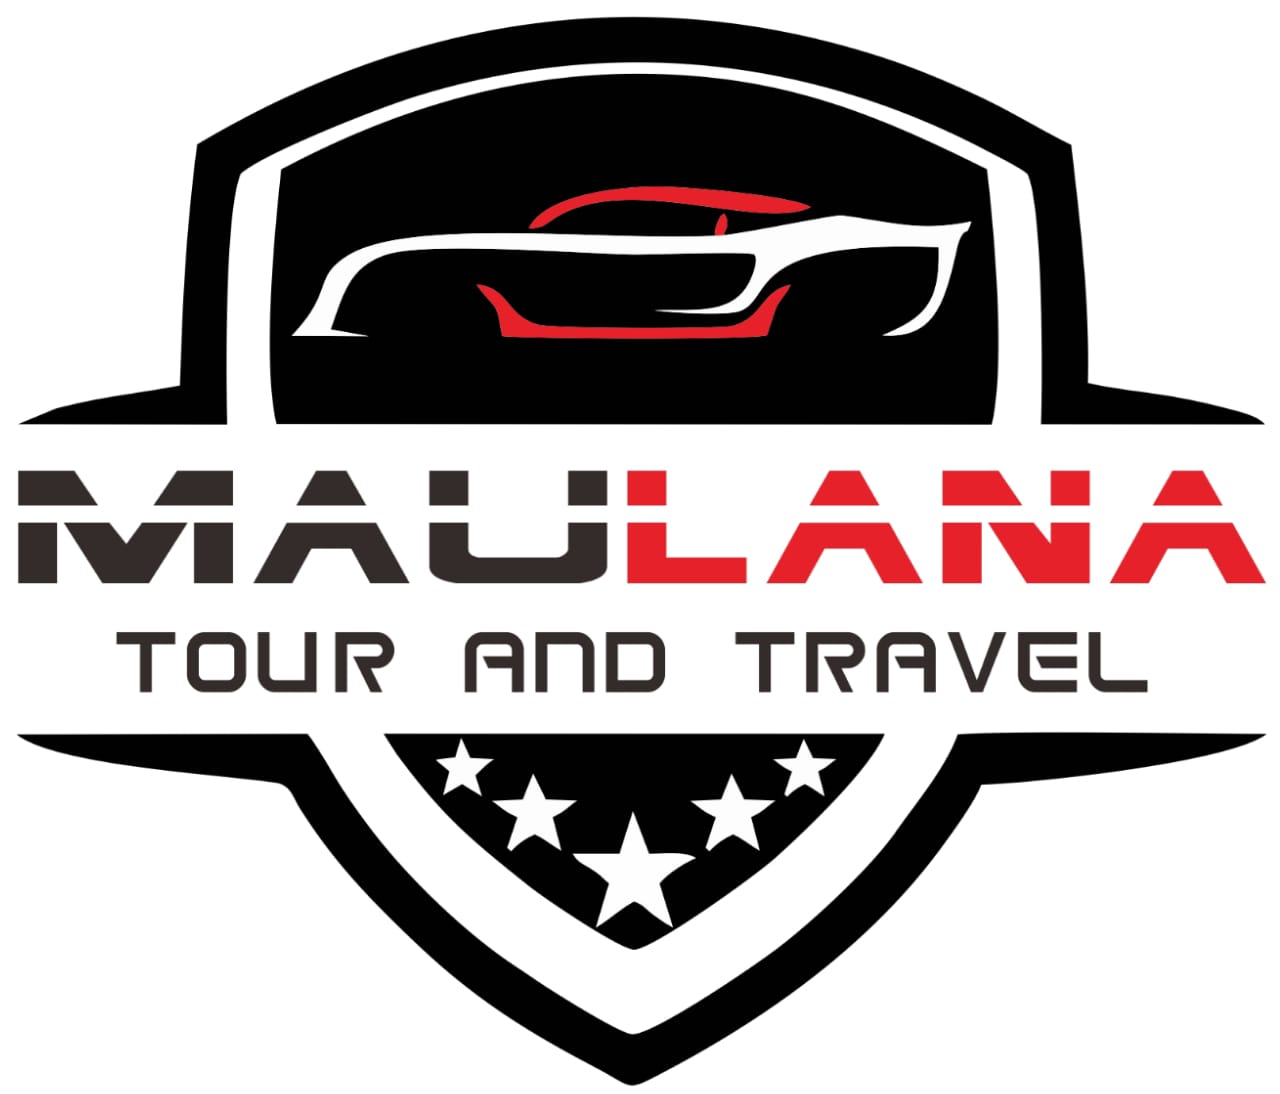 Maulana Tour Travel